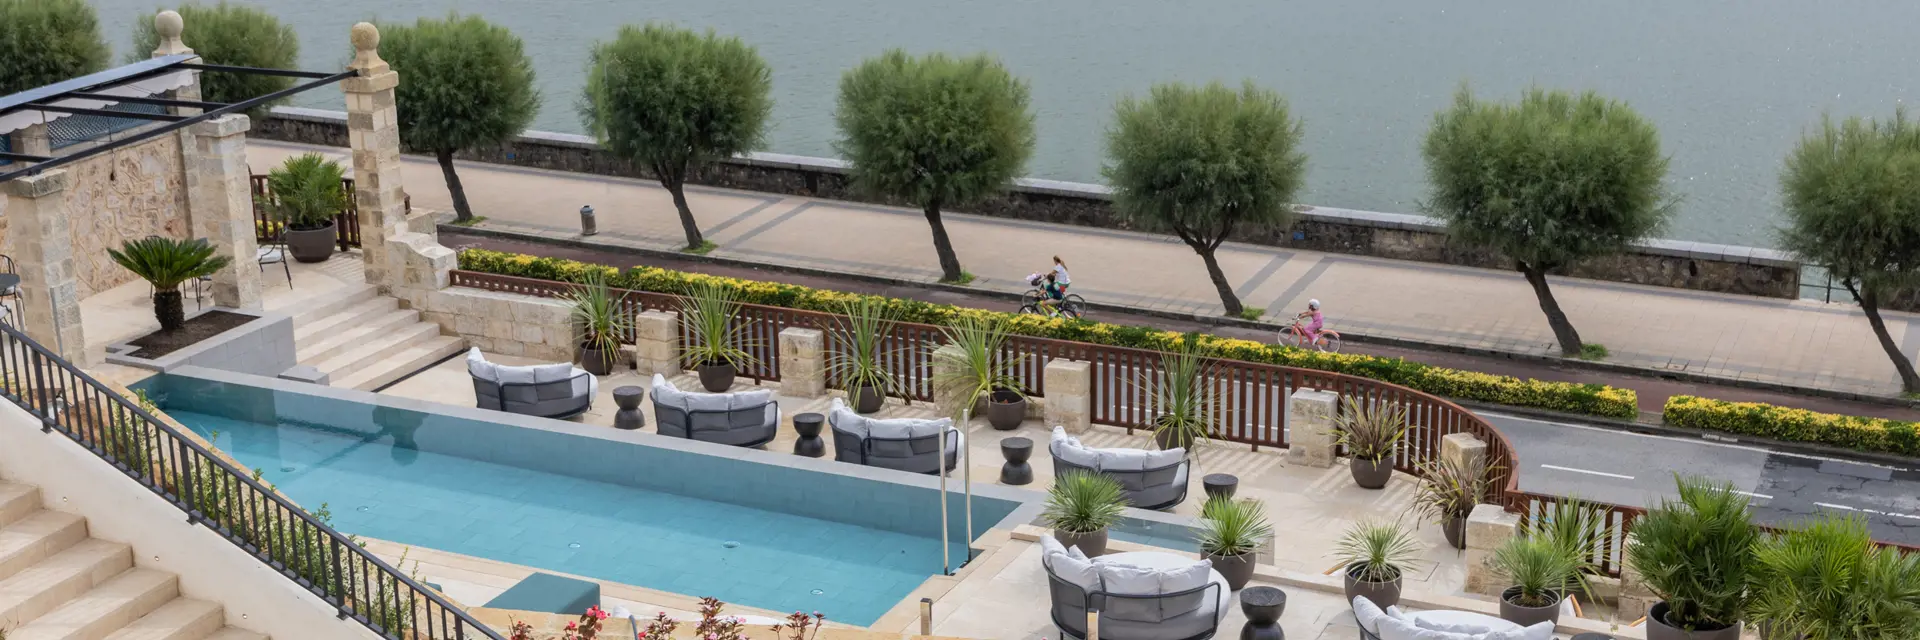 9 palacio arrriluce hotel lujo getxo bilbao piscina exterior